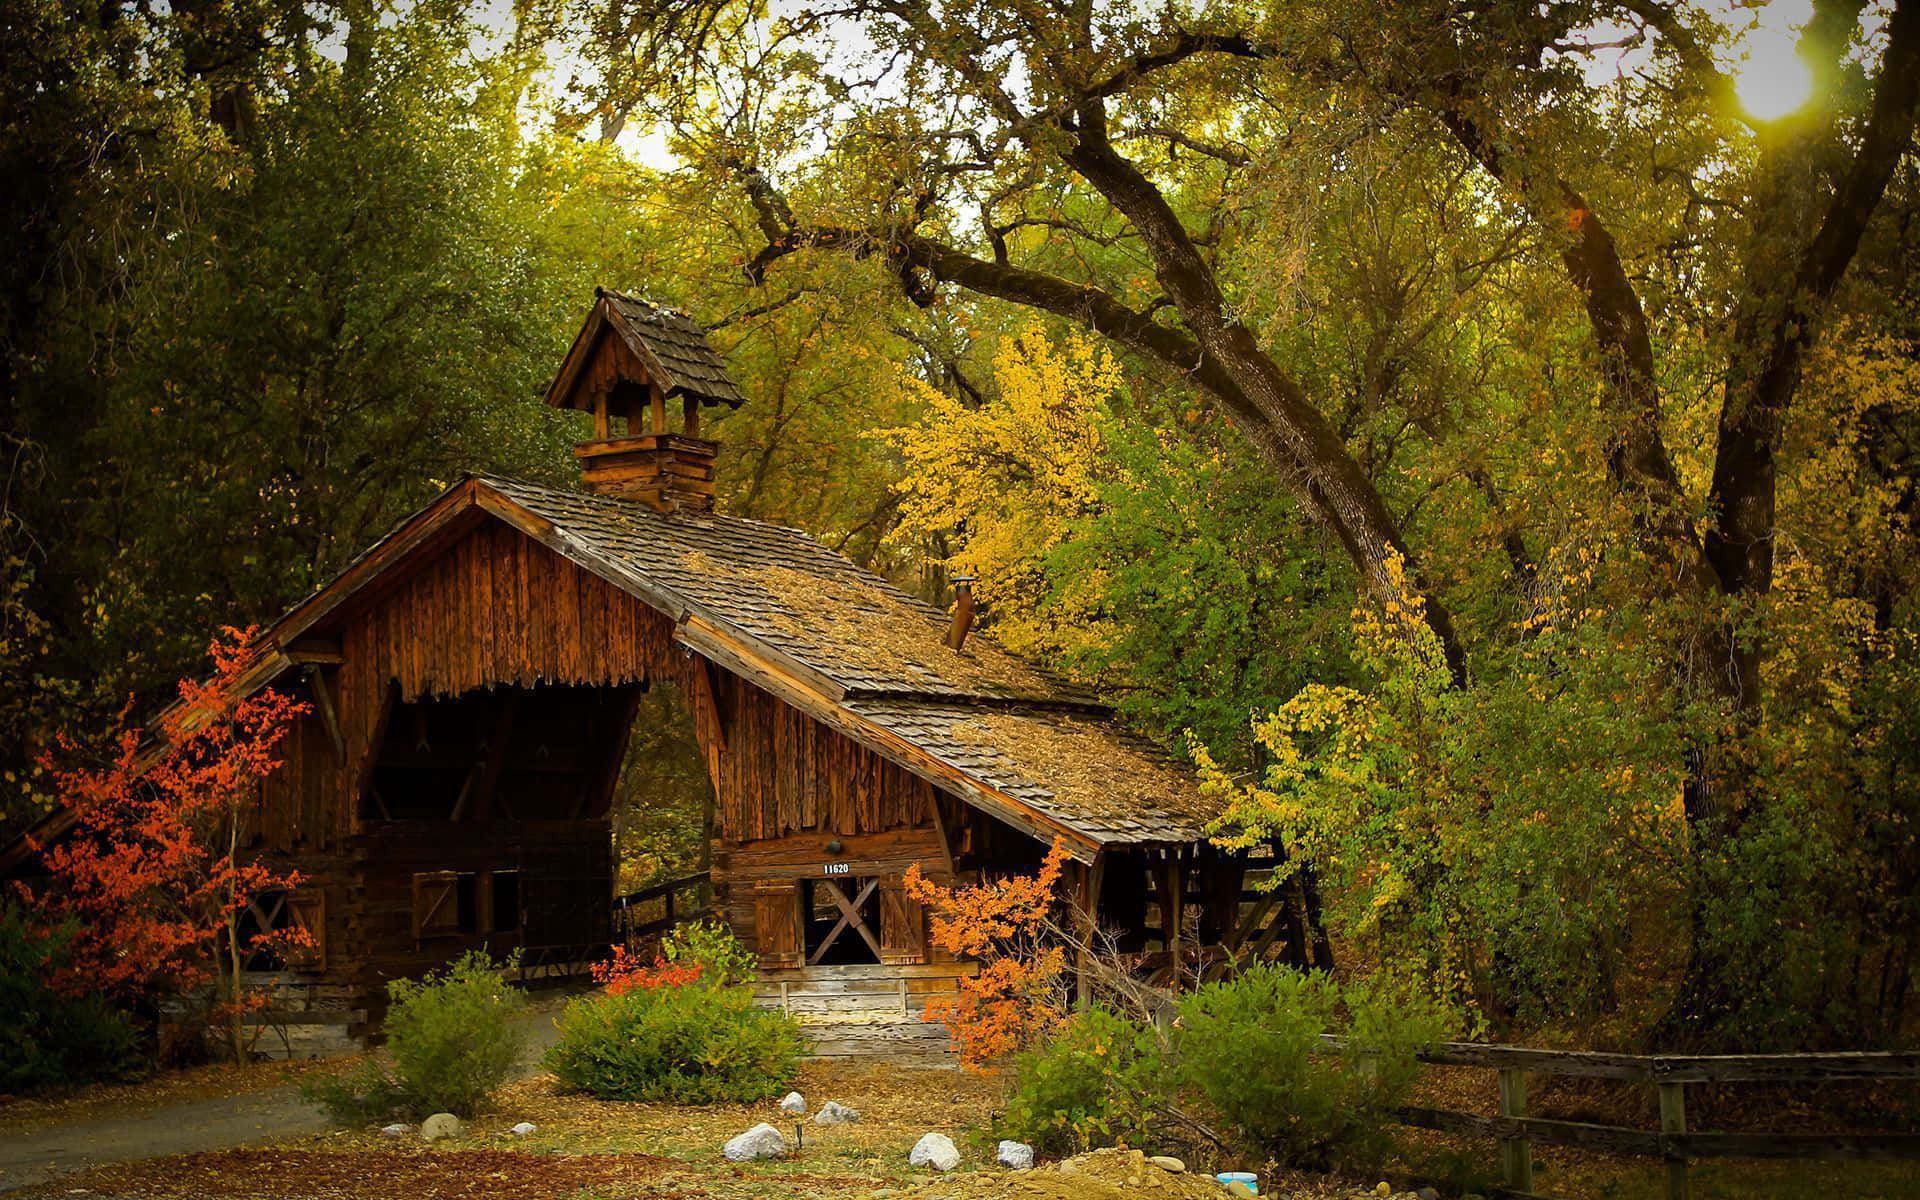 A beautiful rustic barn in the countryside